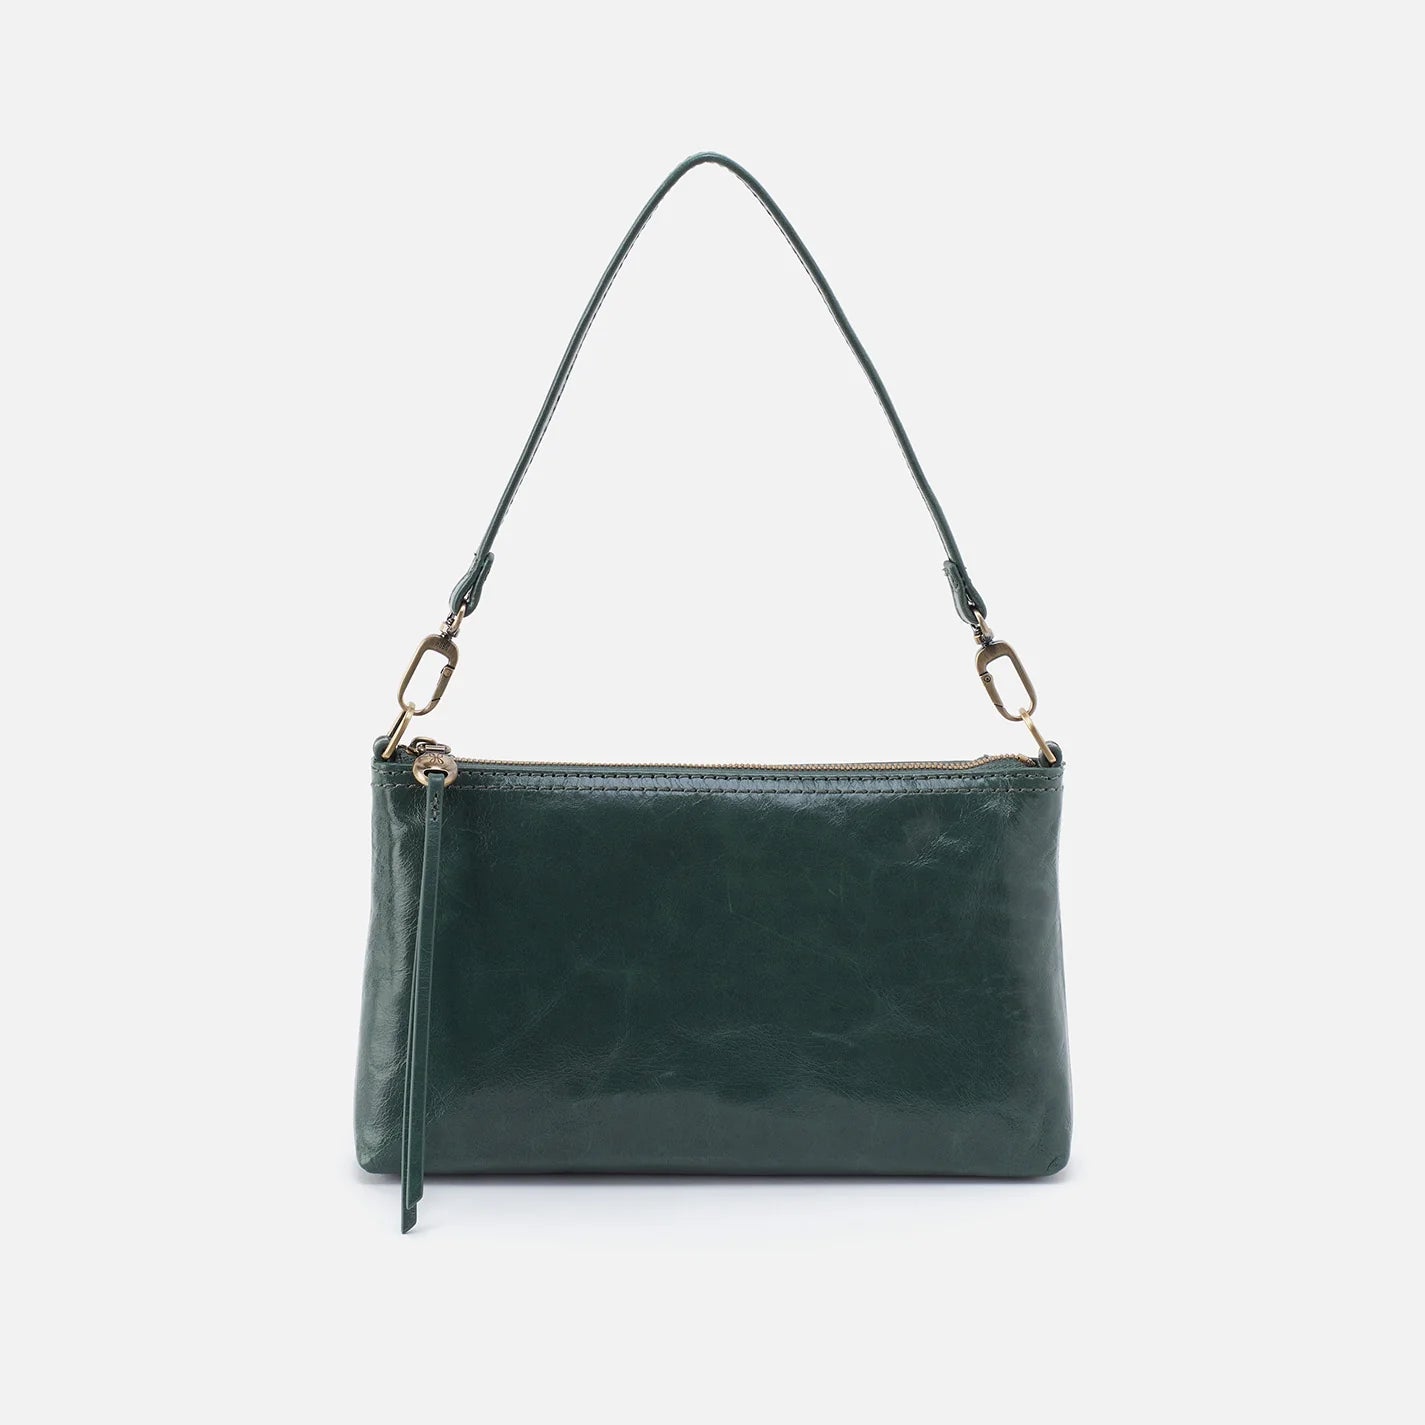 green leather crossbody bag